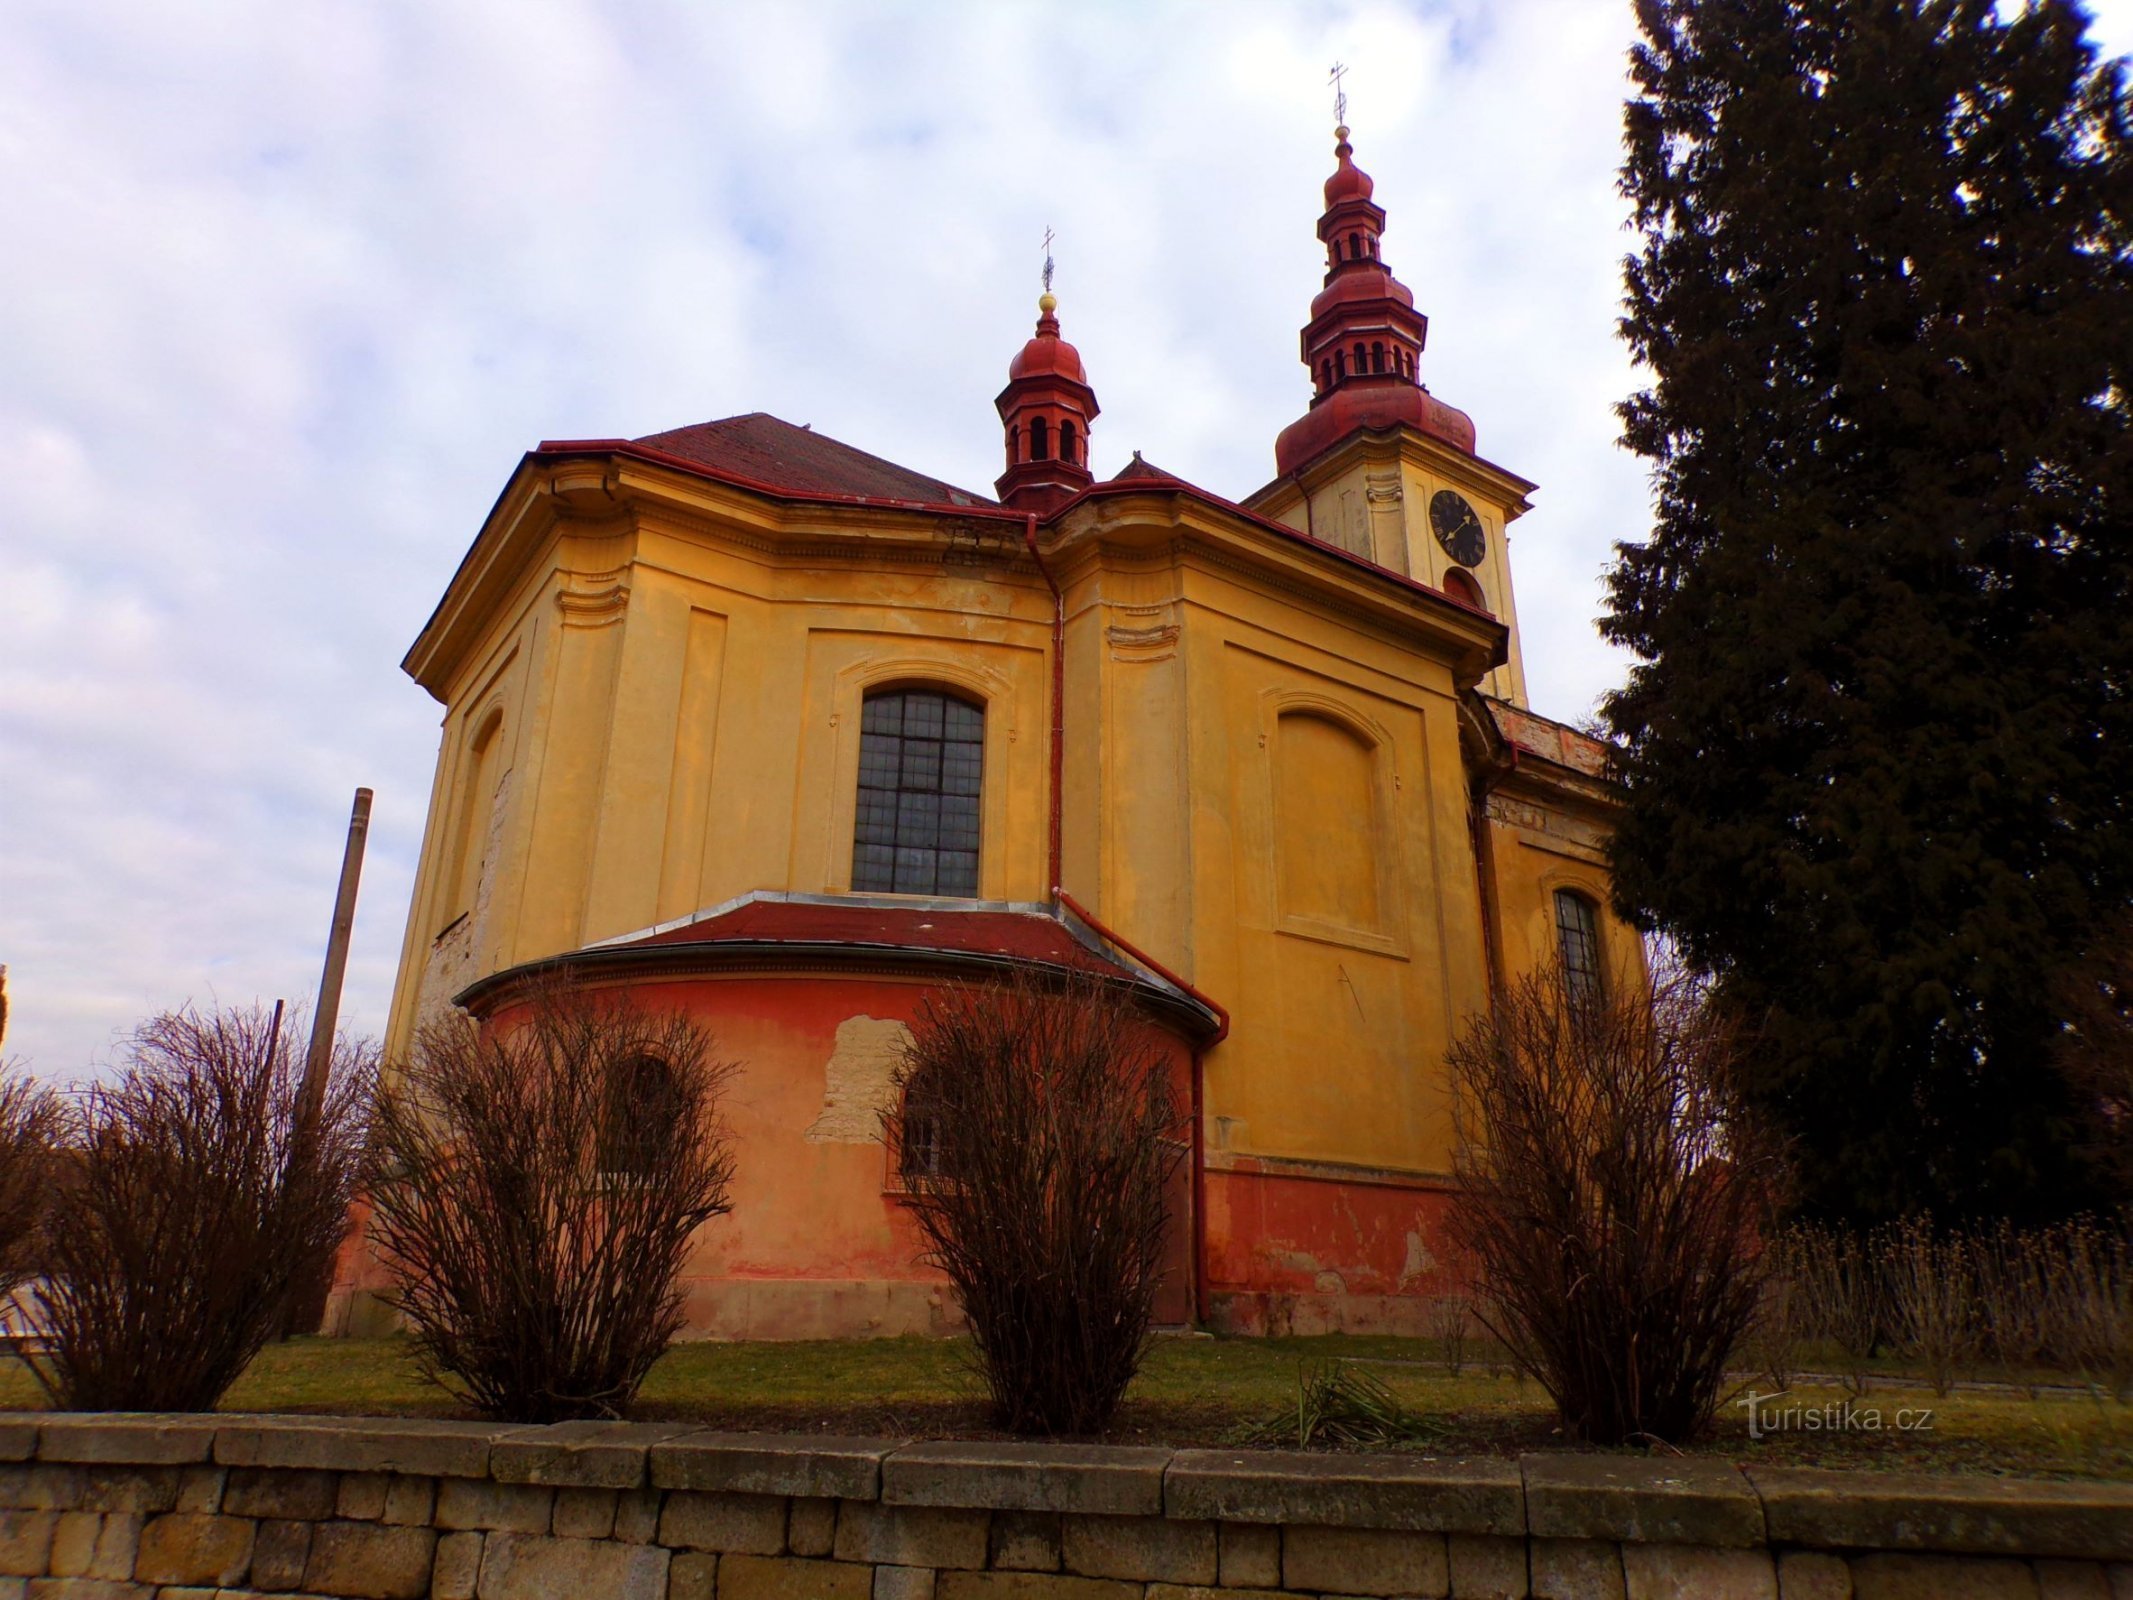 Cerkev sv. Jakub Vetšího (Kopidlno, 3.3.2022. XNUMX. XNUMX)